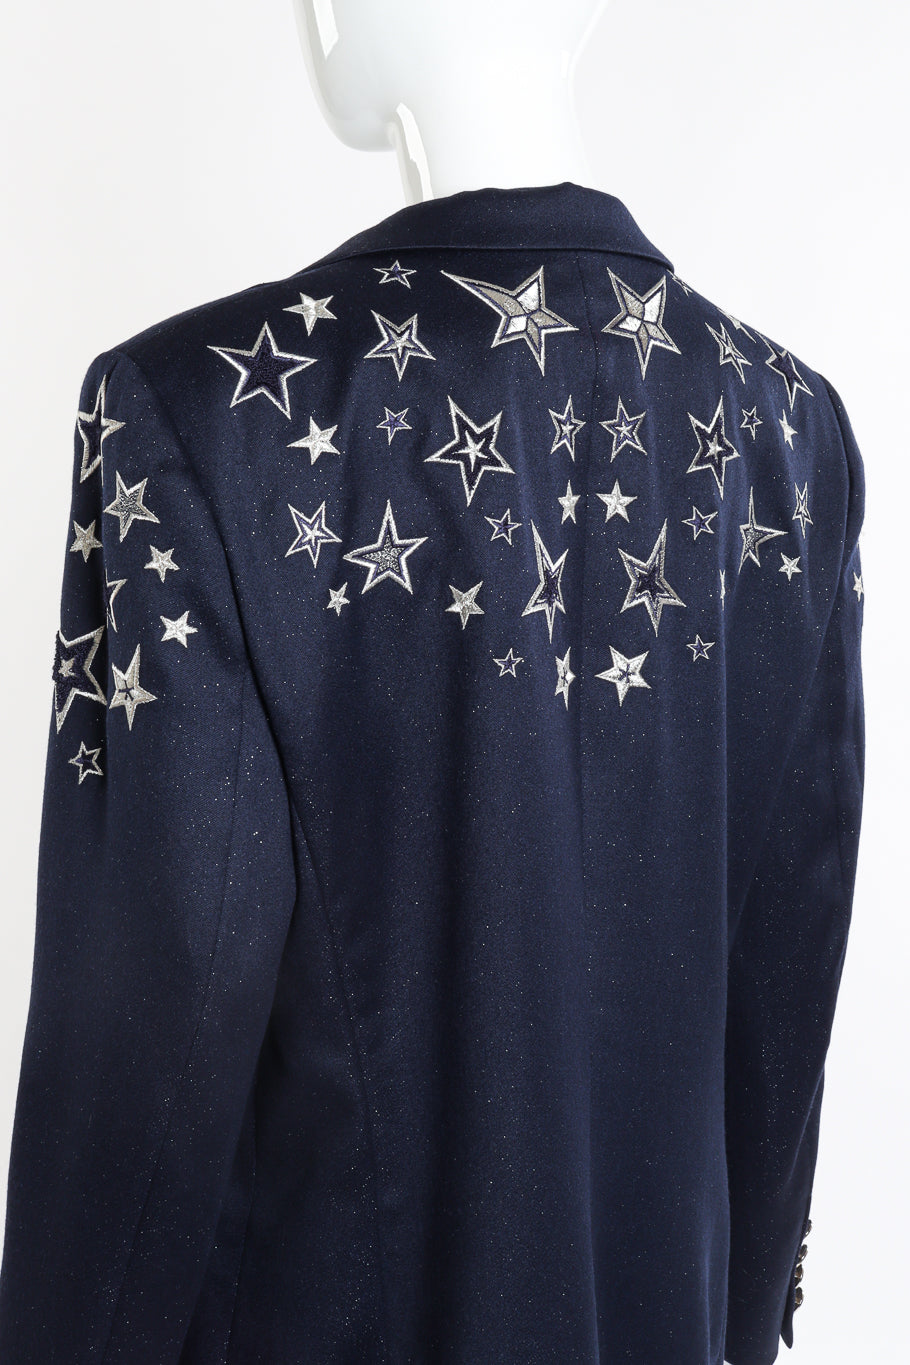 Vintage Escada Embroidered Star Glitter Wool Blazer back on mannequin closeup @recessla